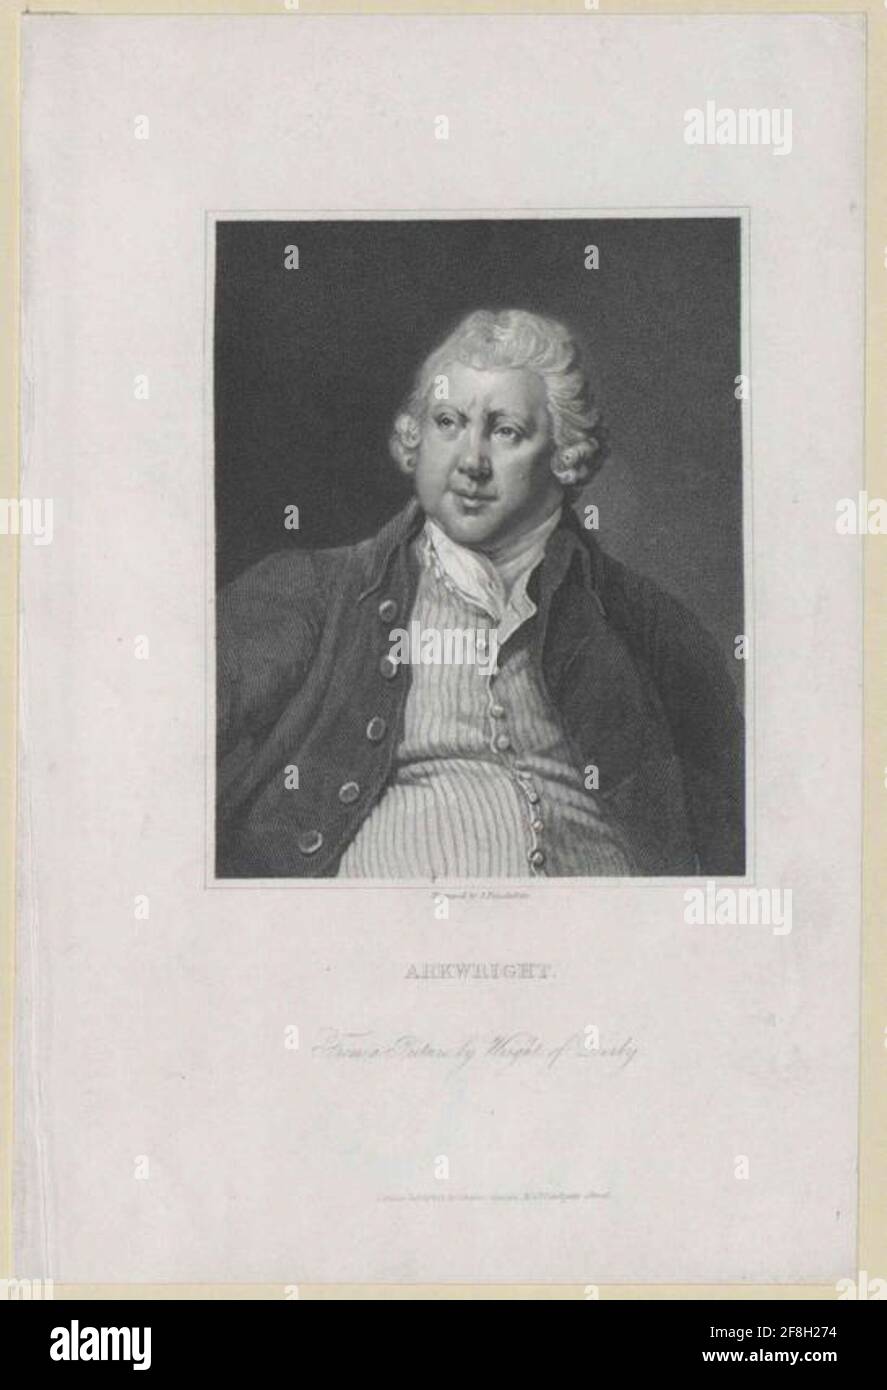 Arkwright, Richard Stecher: PosSelwhite, James publisher: Charles Knight  Dating: 1820/1840 Stock Photo